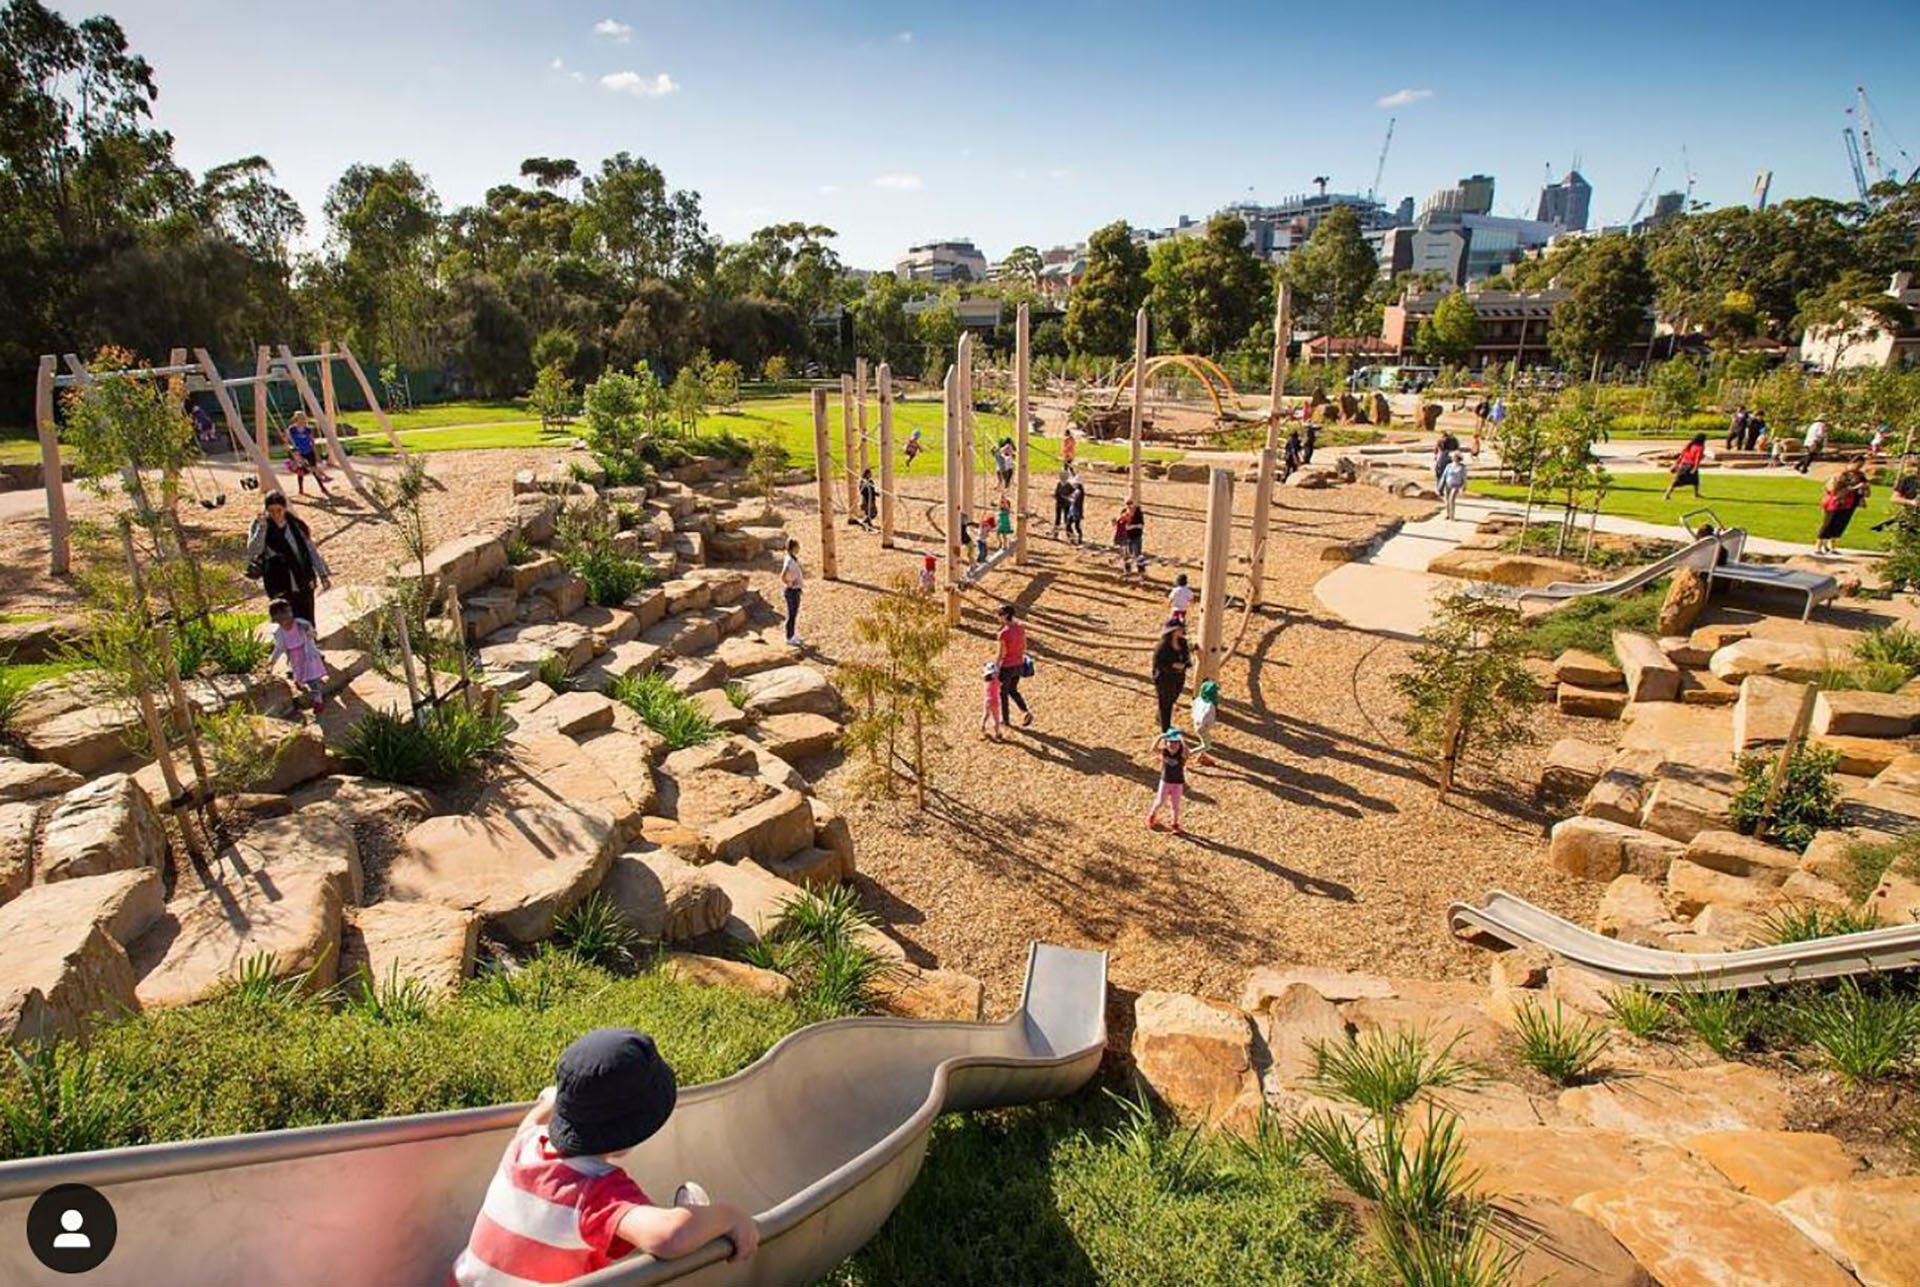 Playground в плей маркете. Royal Park nature Play Playground. Мельбурн, Австралия. Детская площадка Роял парк. Детская площадка ландшафт. Королевский парк в Мельбурне детская площадка.